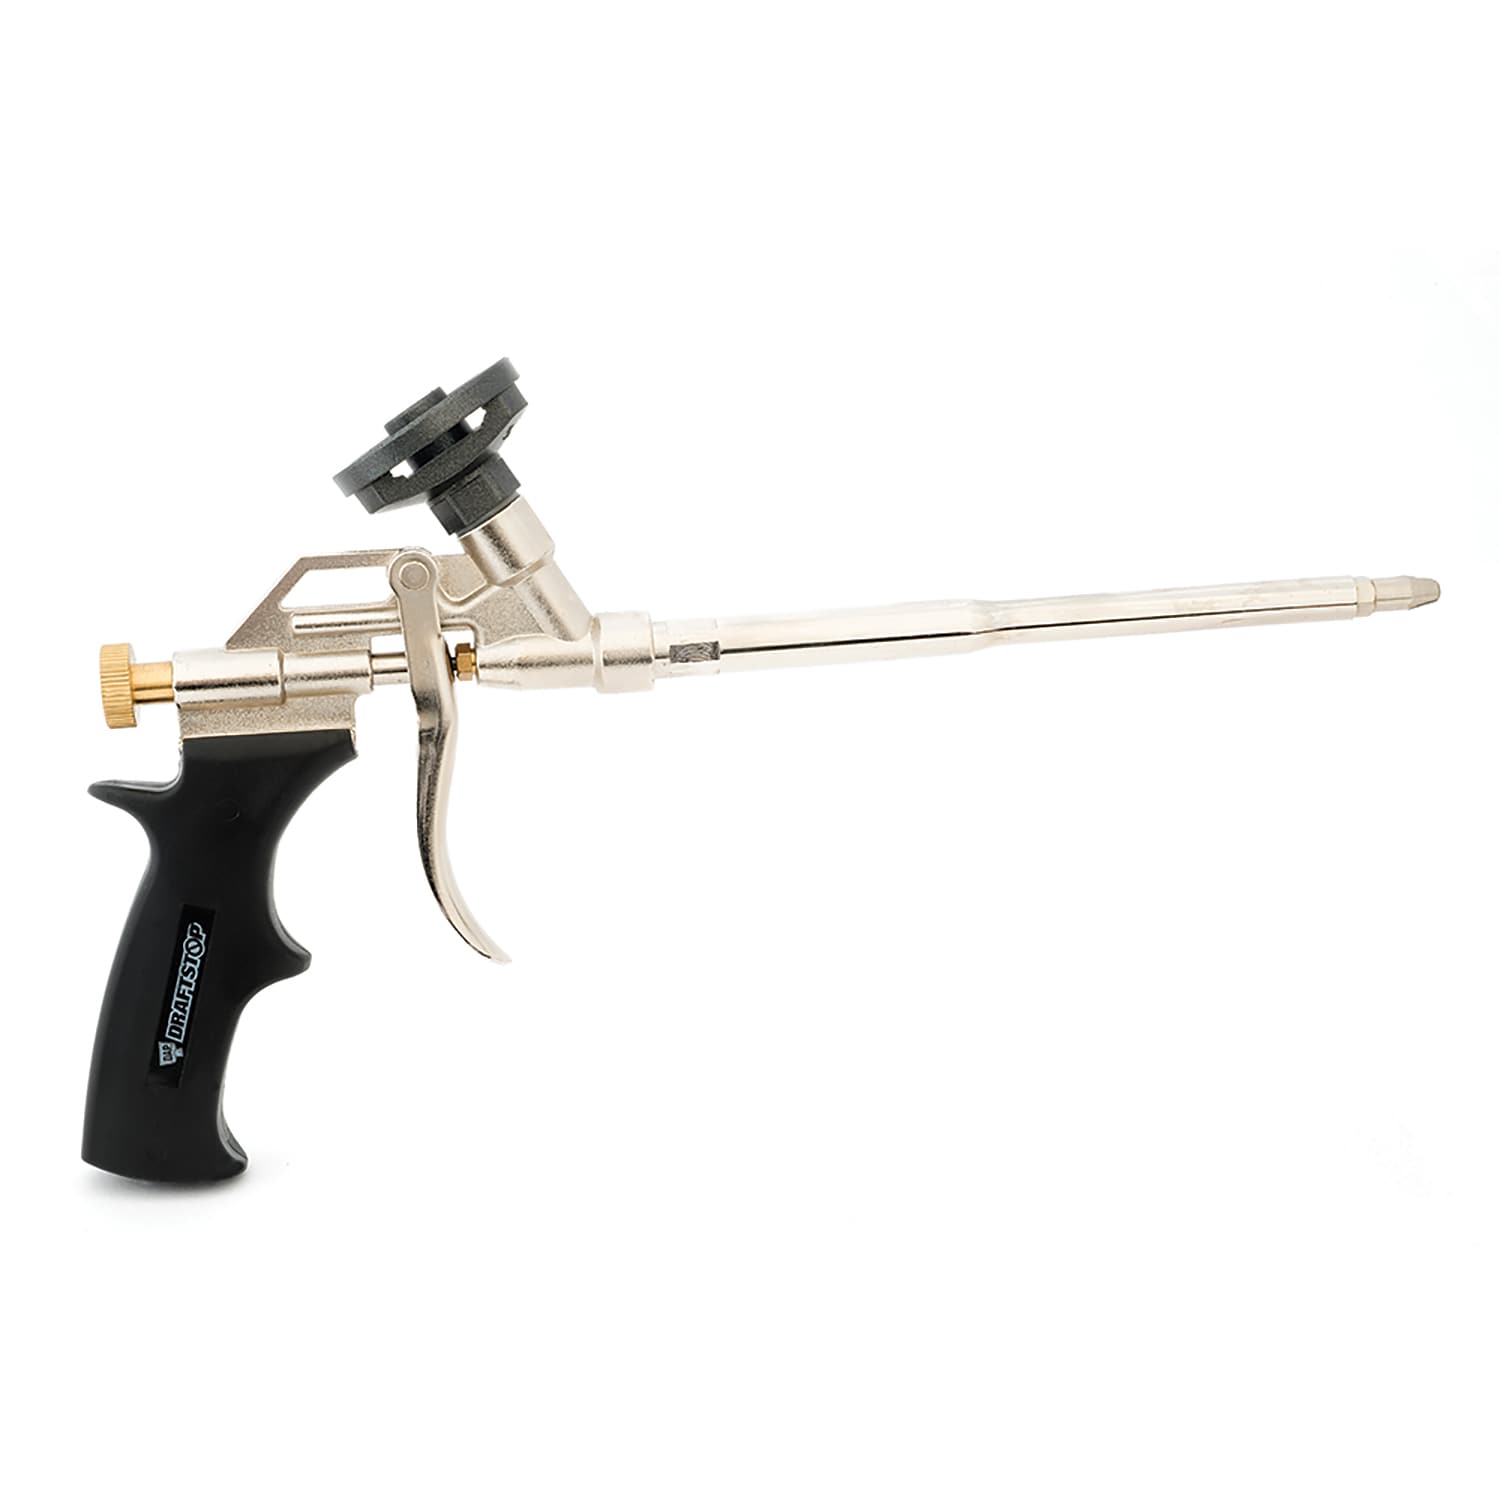 DAP 28775 Precision Gun Foam Applicator for sale online 